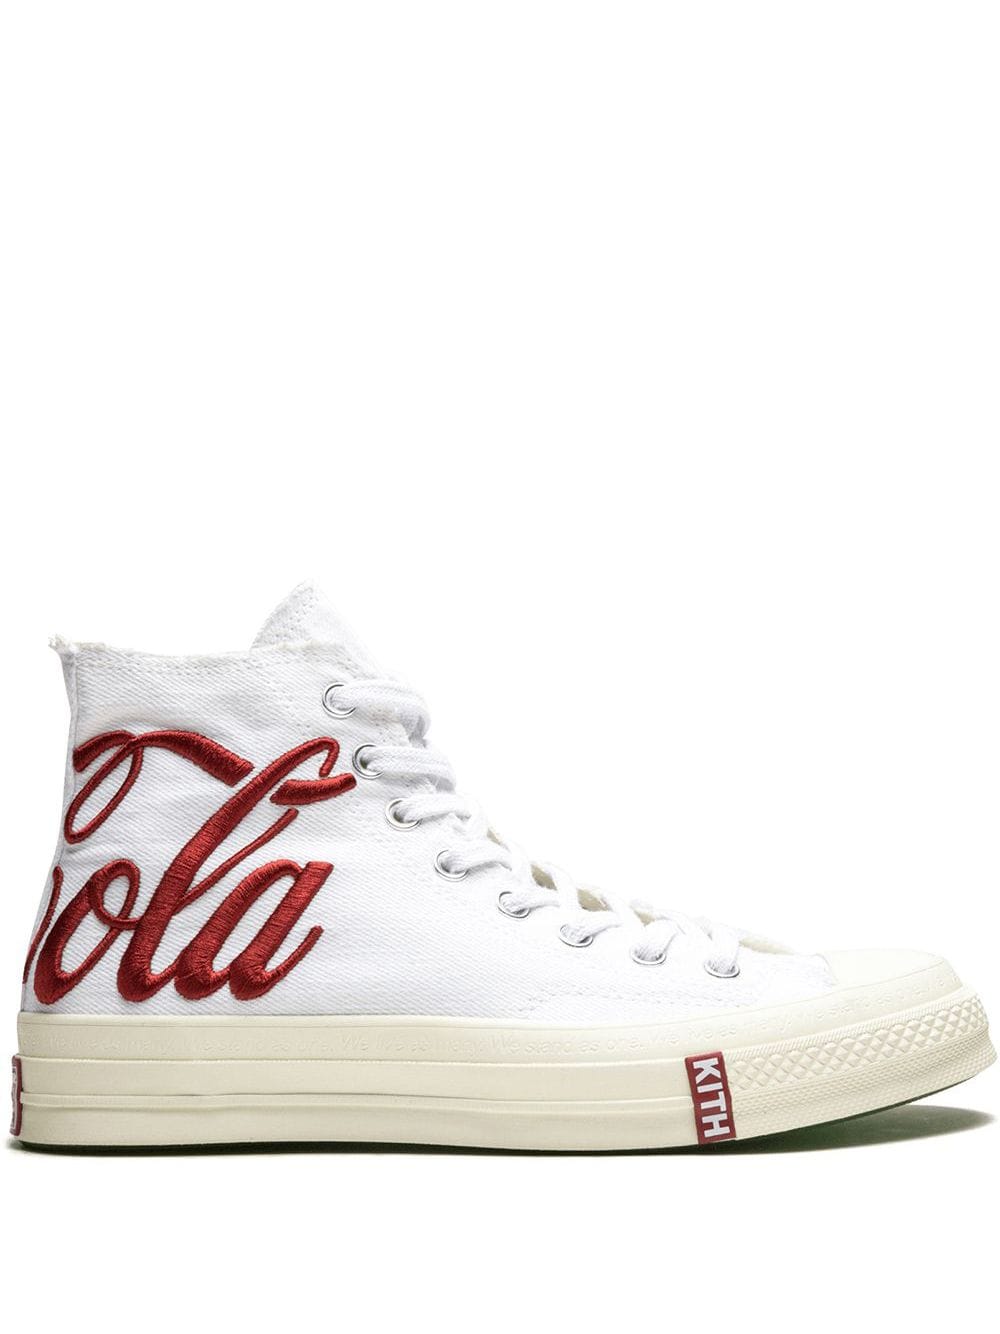 Shop white Converse x Kith x Coca-Cola 